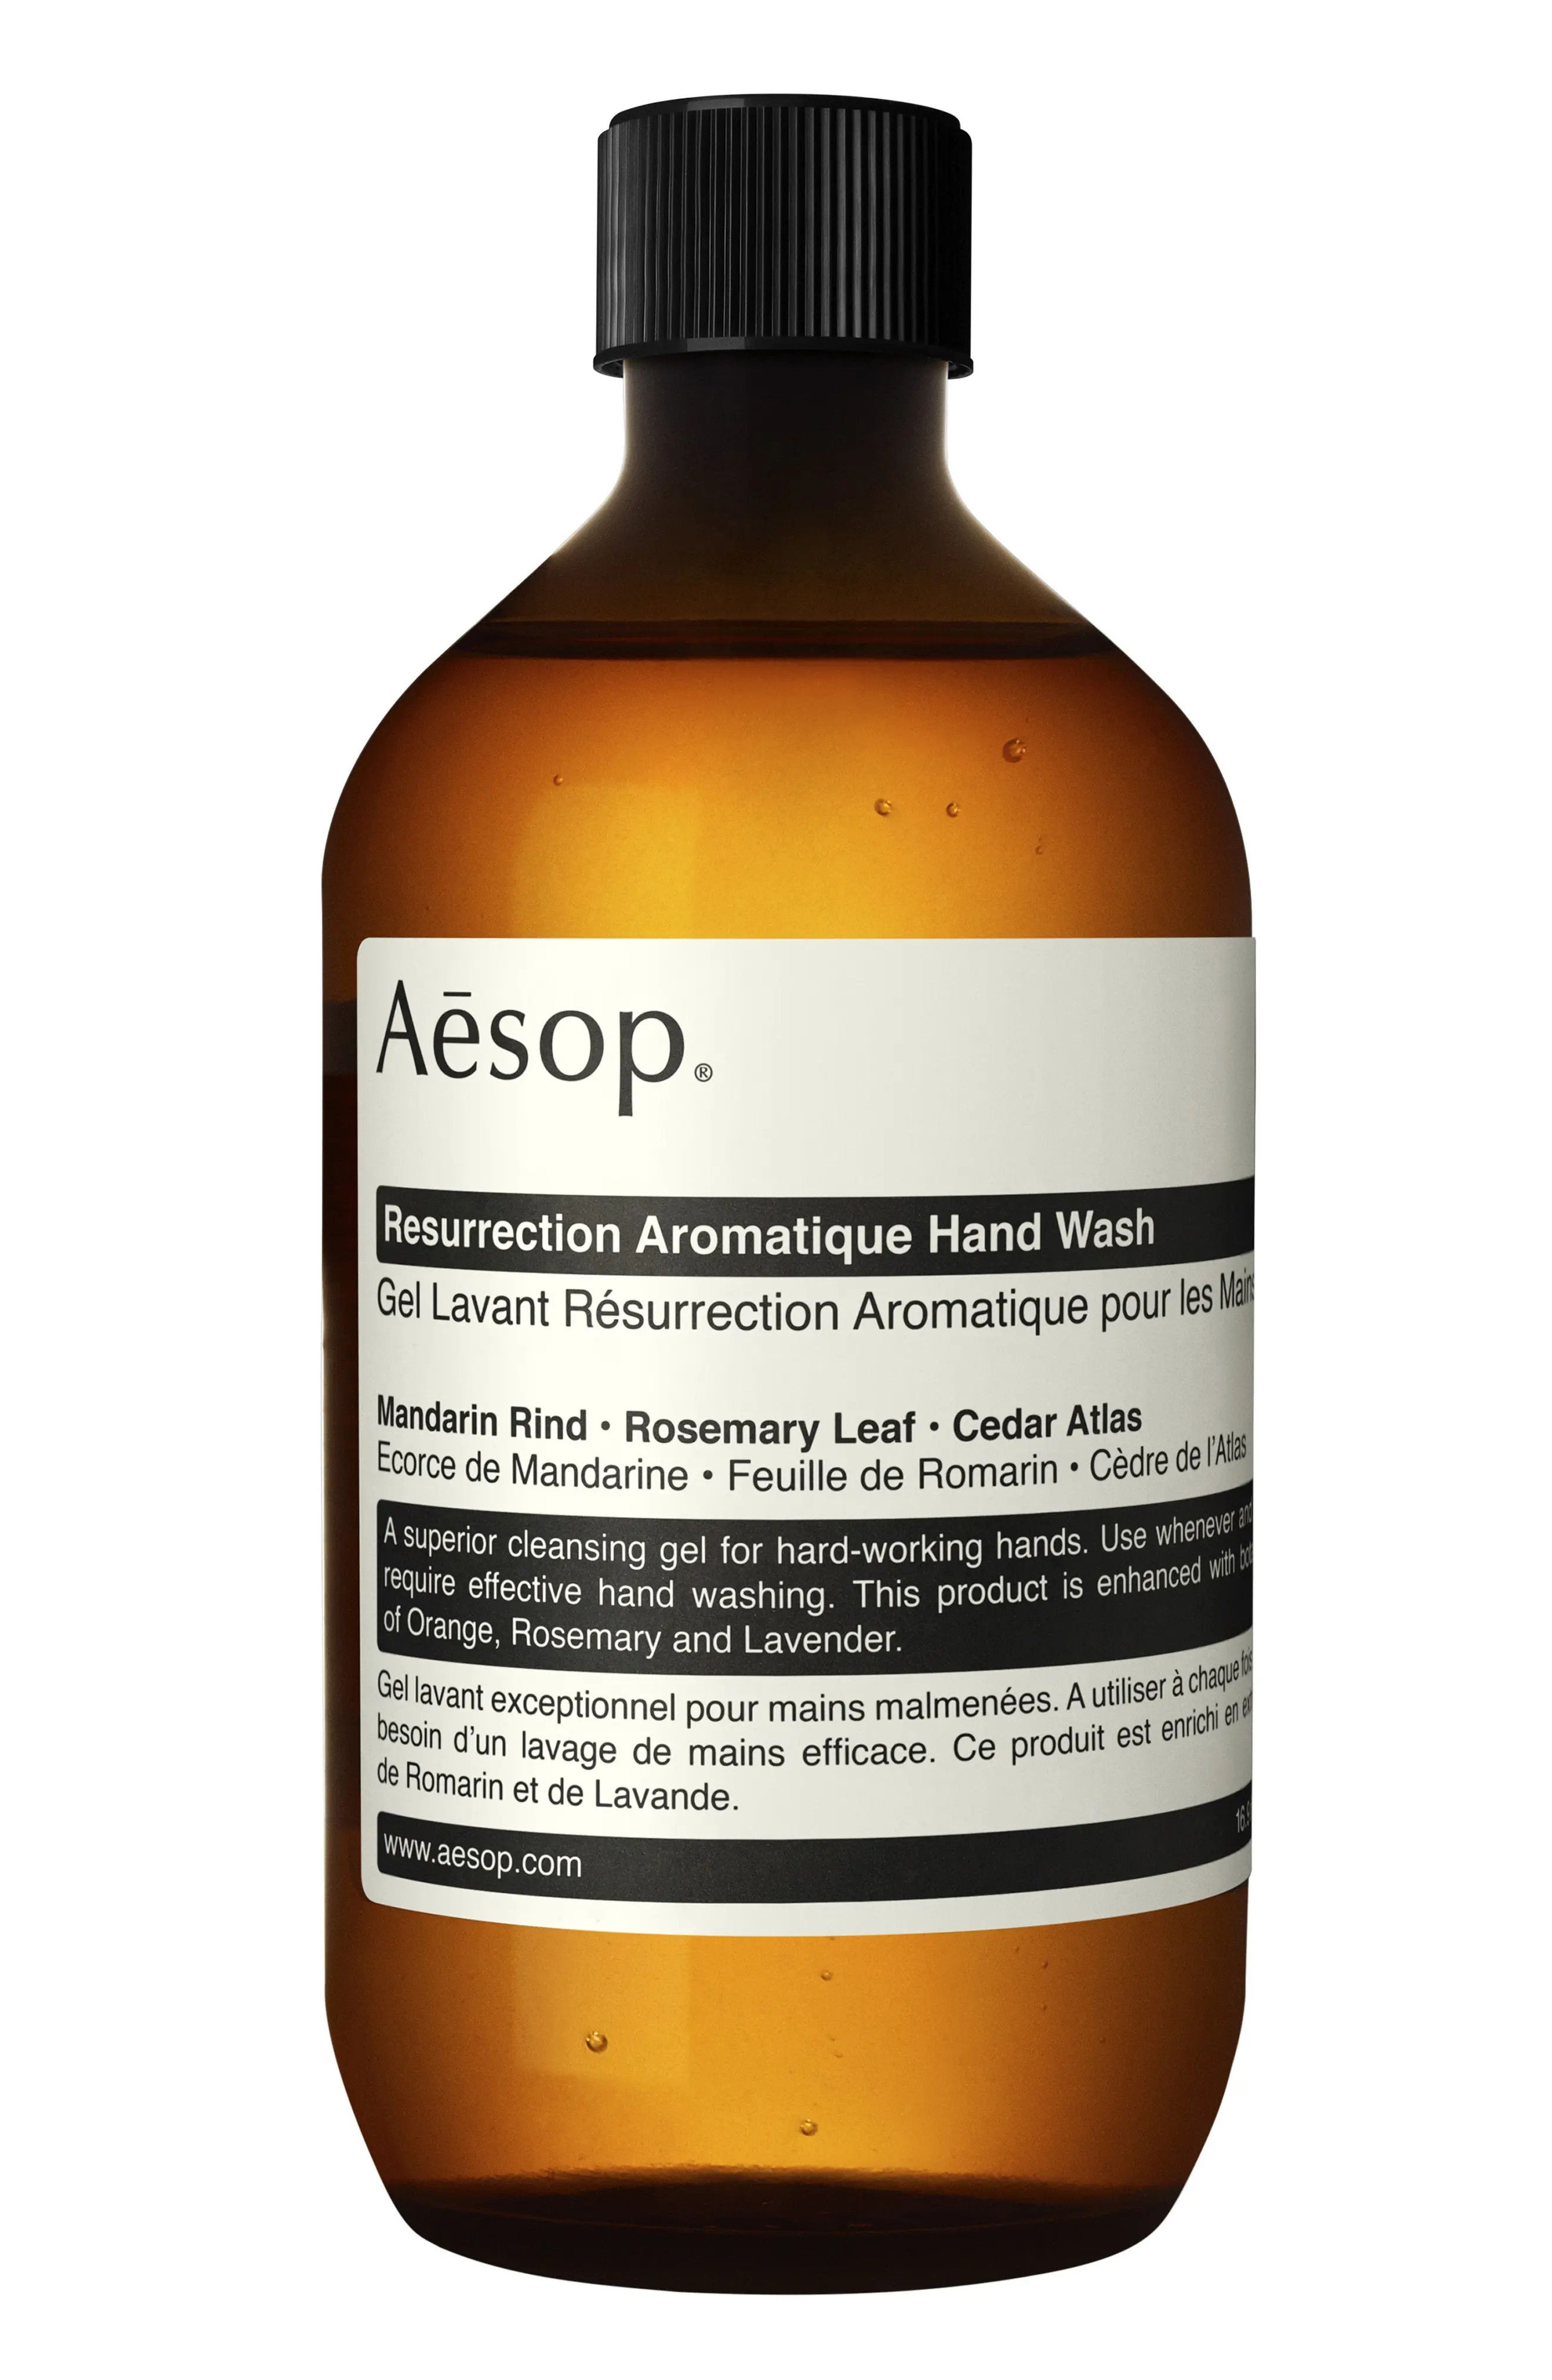 Aesop Resurrection Aromatique Hand Wash in Refill (No Pump) at Nordstrom, Size 16.9 Oz | Nordstrom